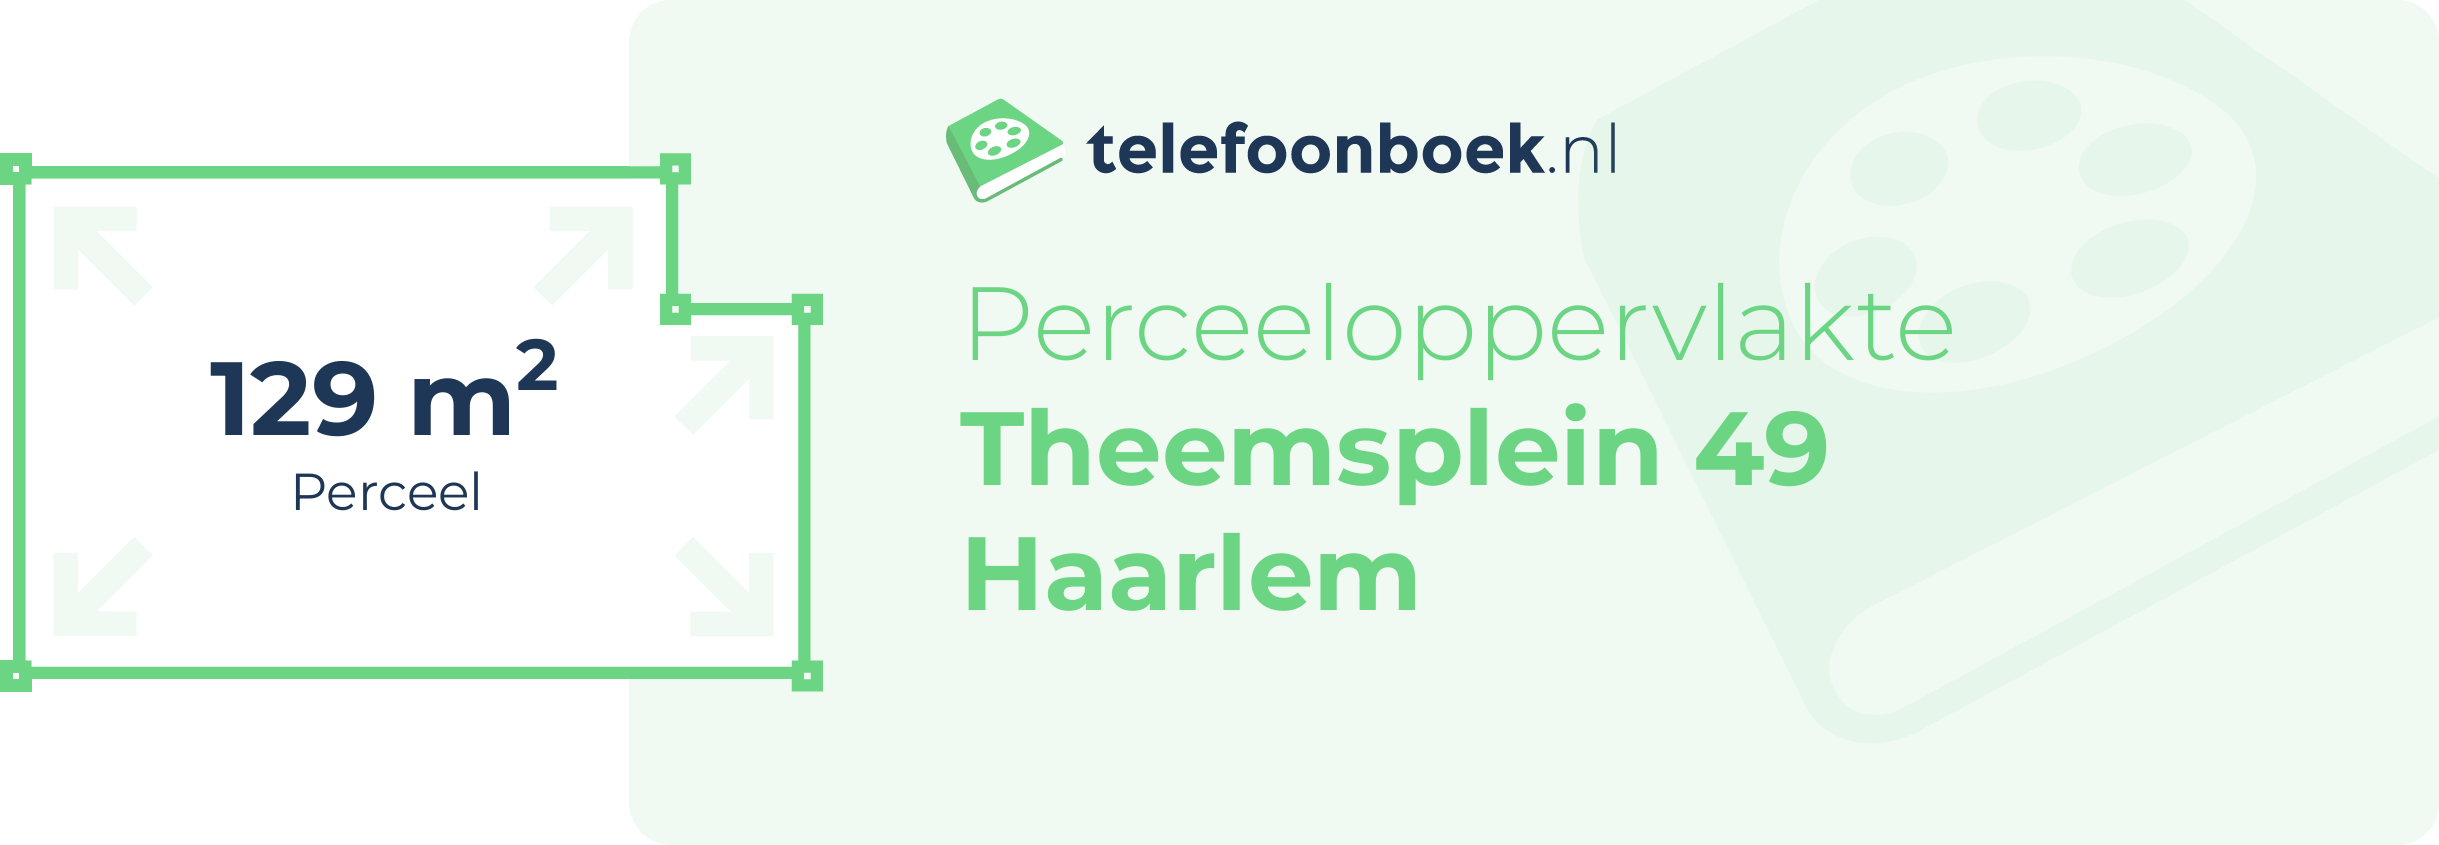 Perceeloppervlakte Theemsplein 49 Haarlem